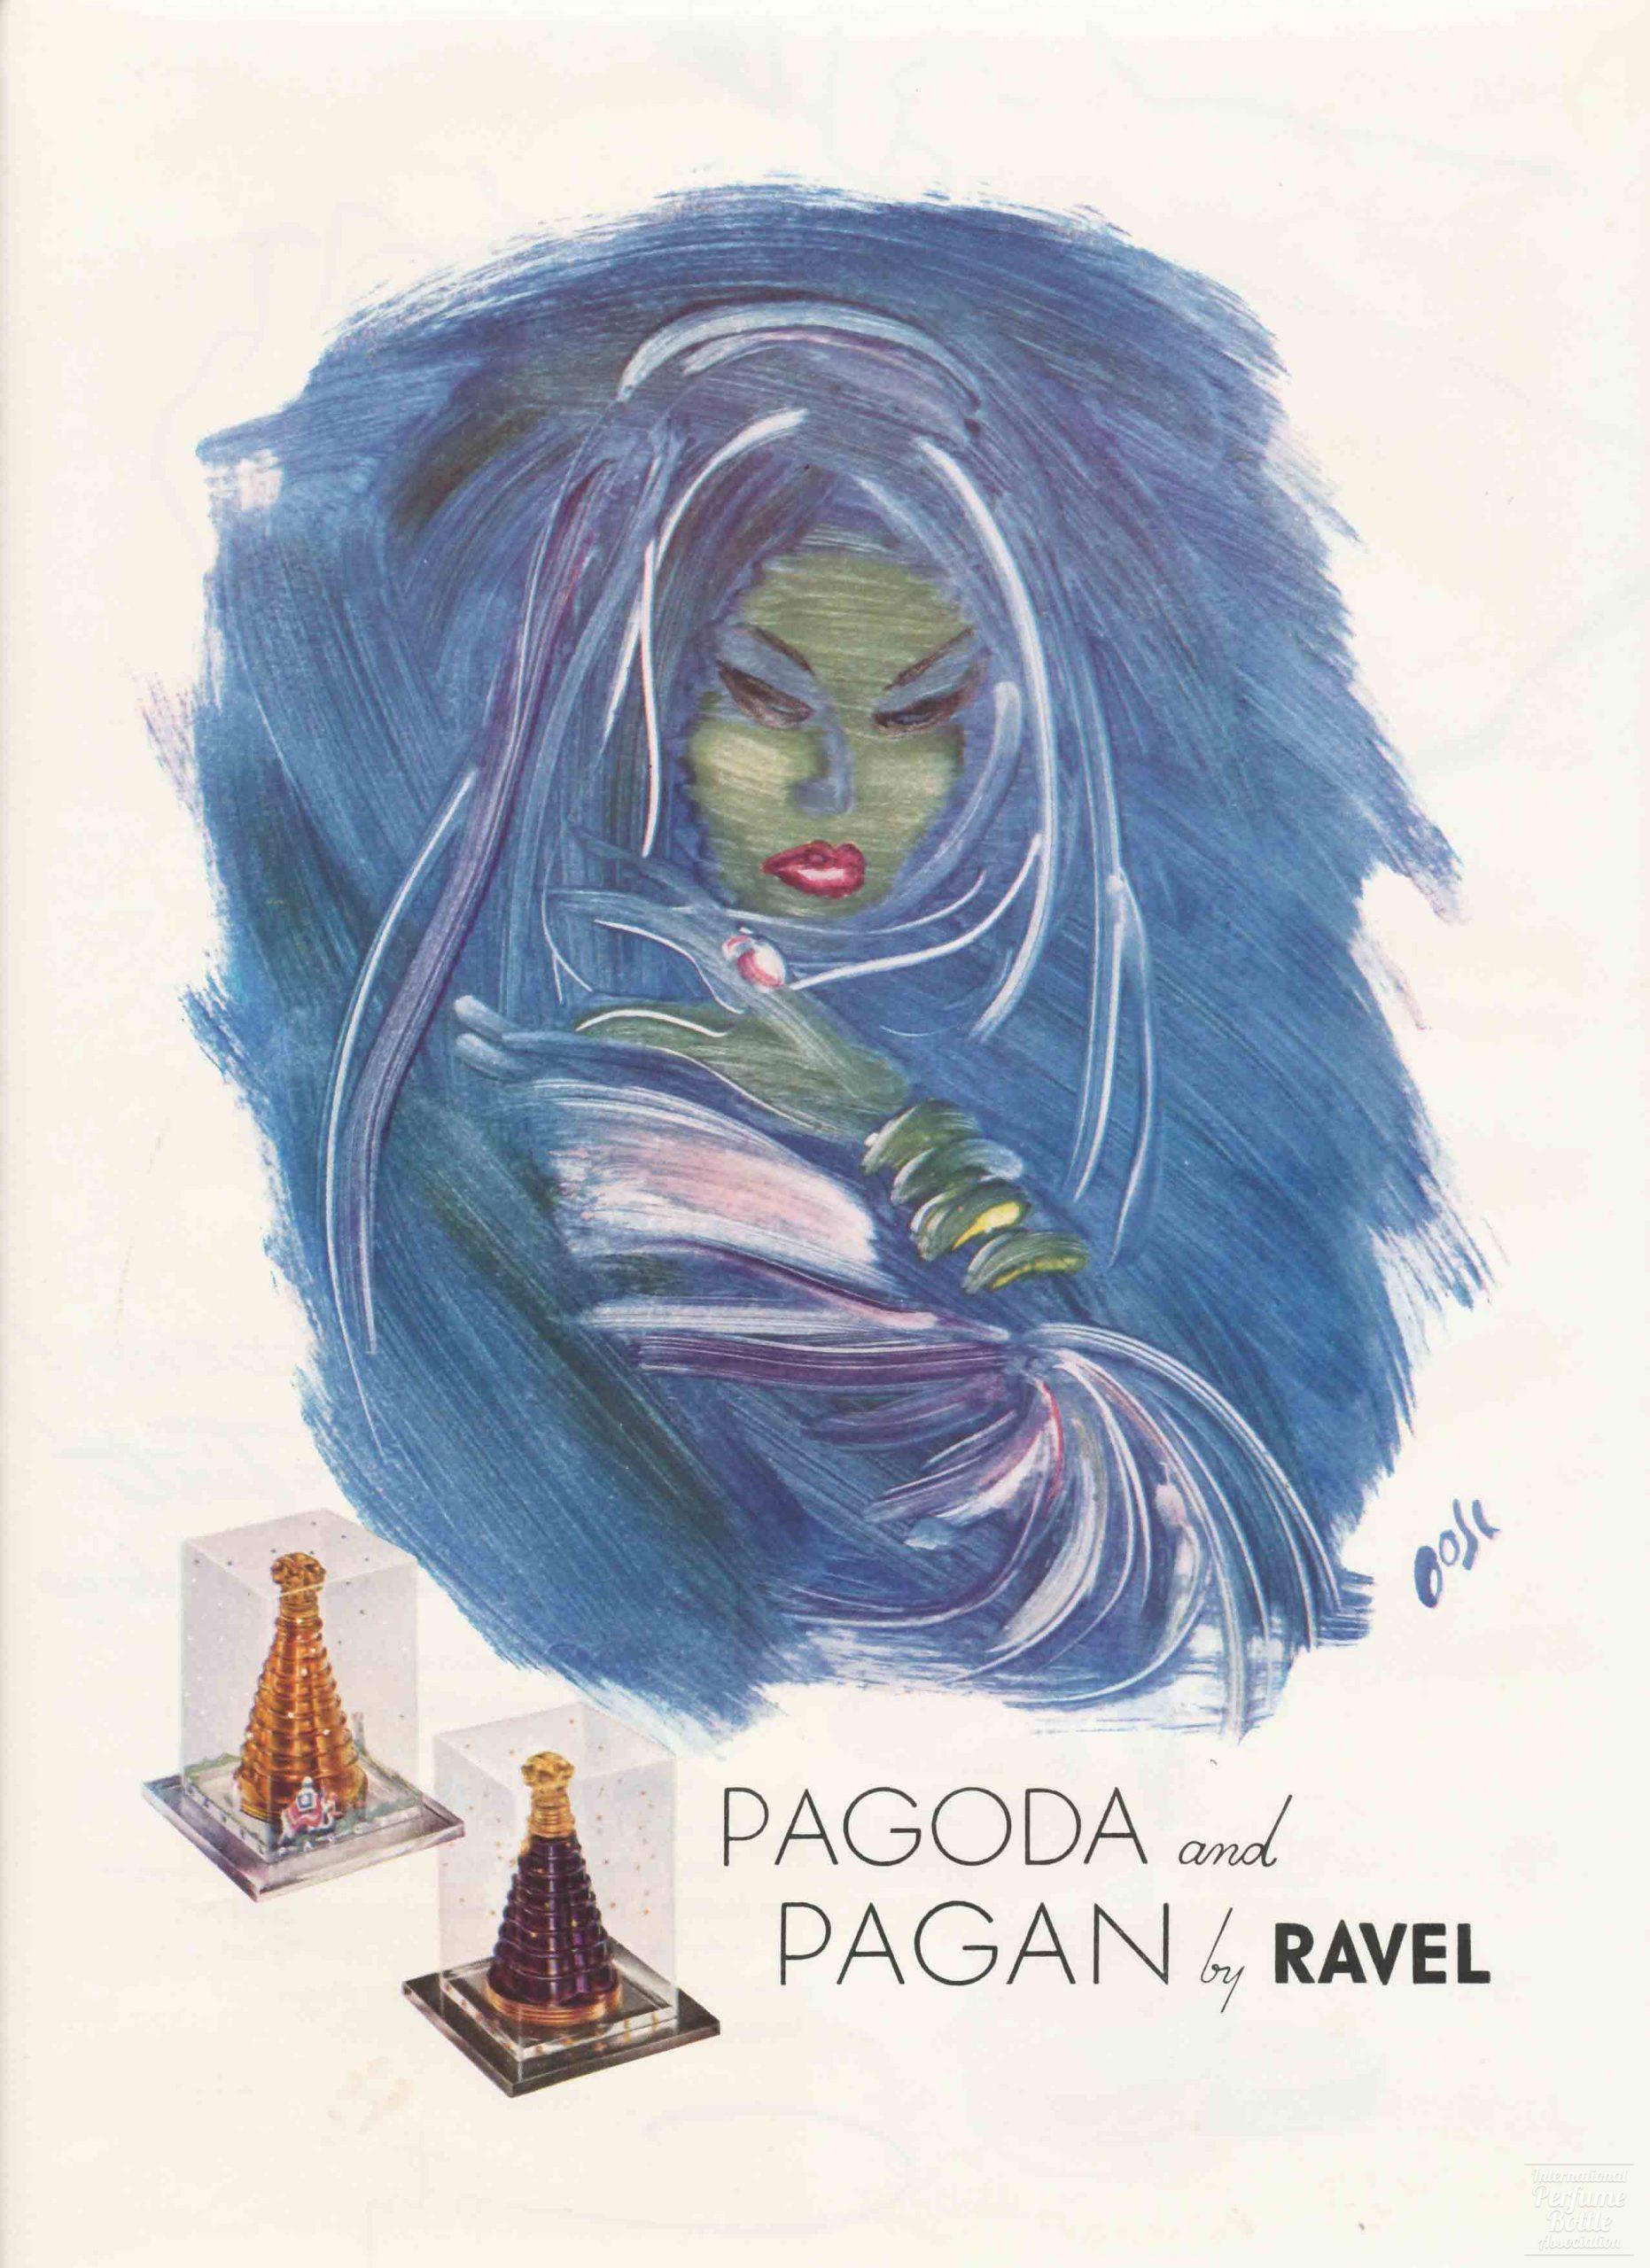 "Pagoda" and "Pagan" by Ravel Advertisement - 1946